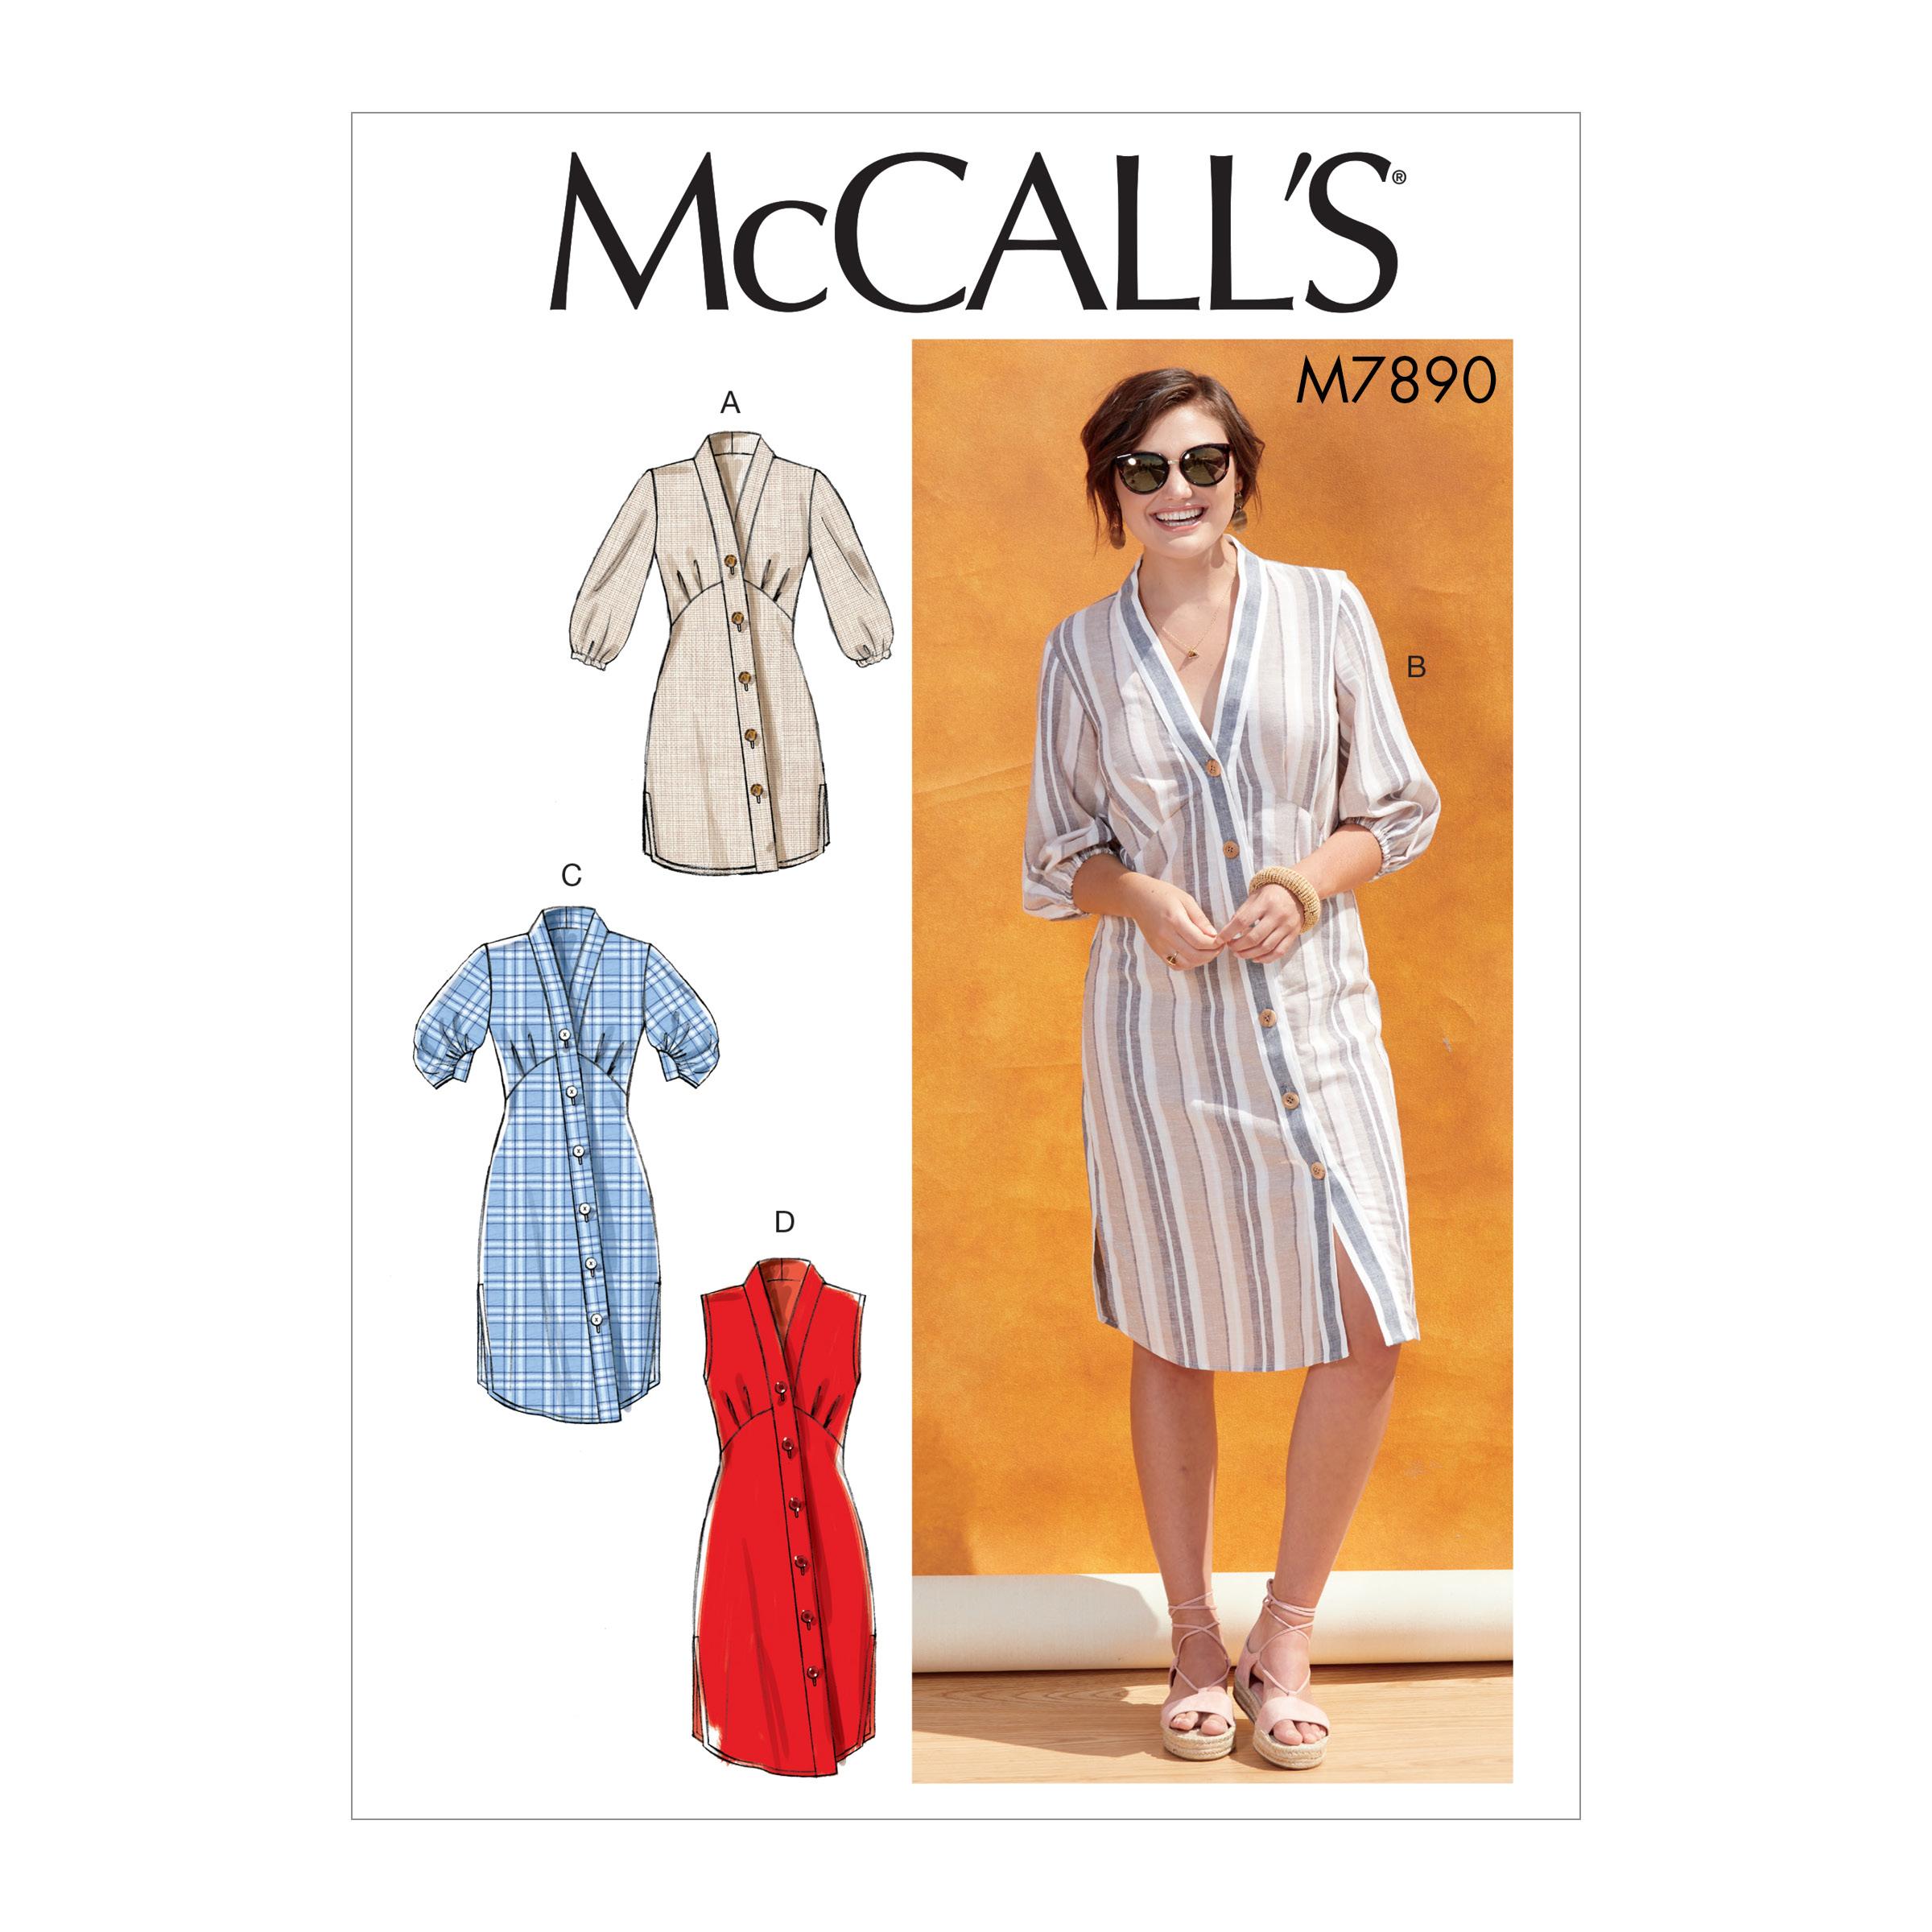 McCalls M7890 Misses Dresses, Misses Tops